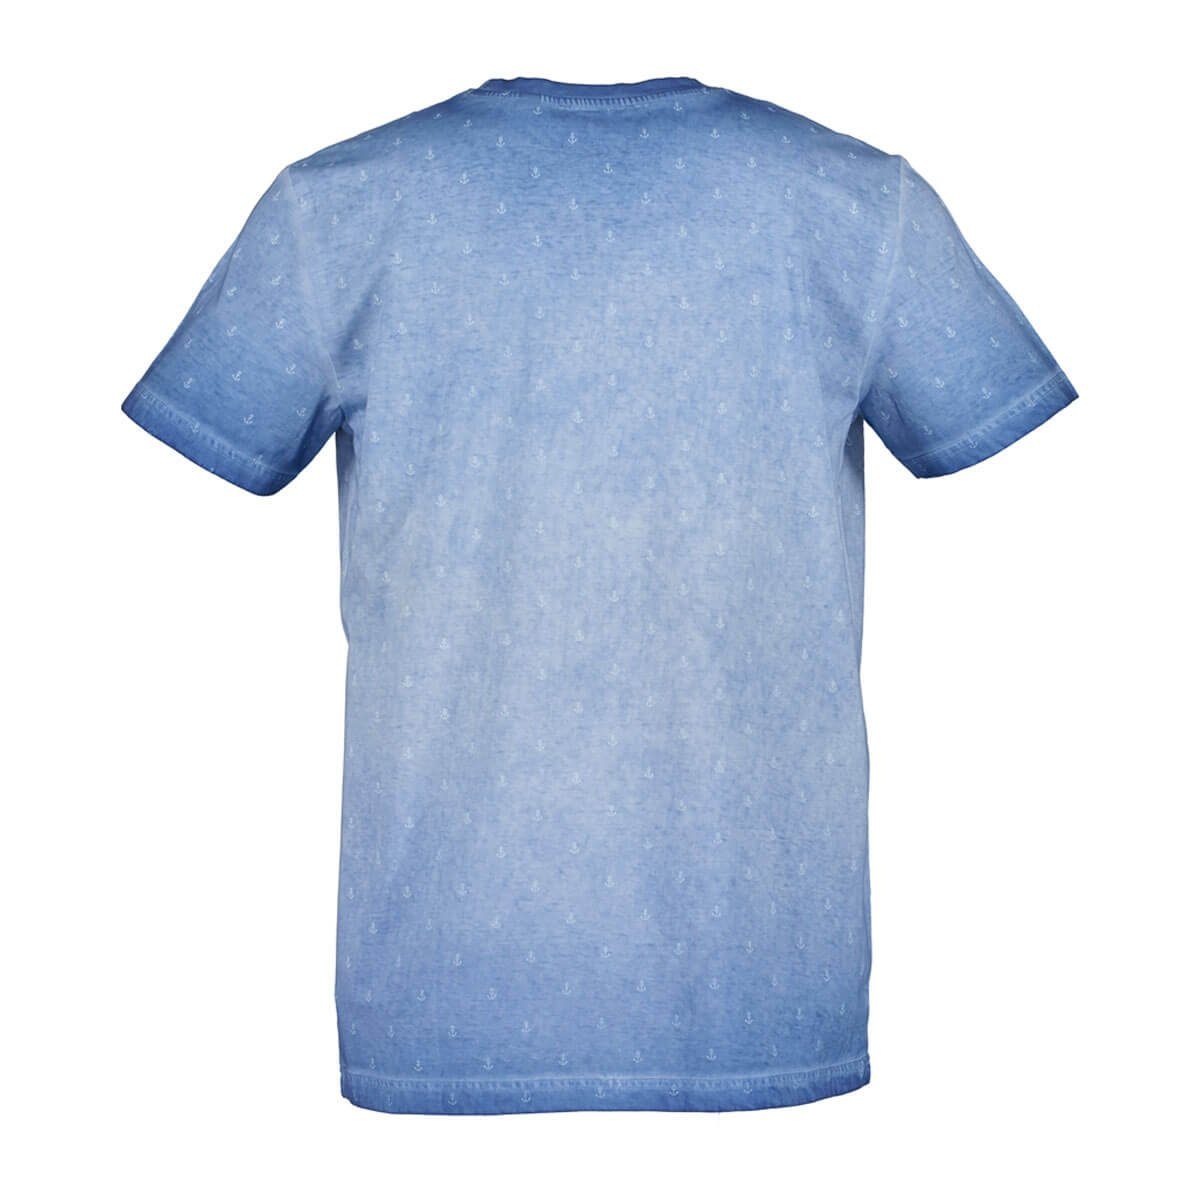 Blue Seven T-Shirt Herren mit Shirt Kurzarm-Sommershirt - Anker-Allover-Print Rundhals